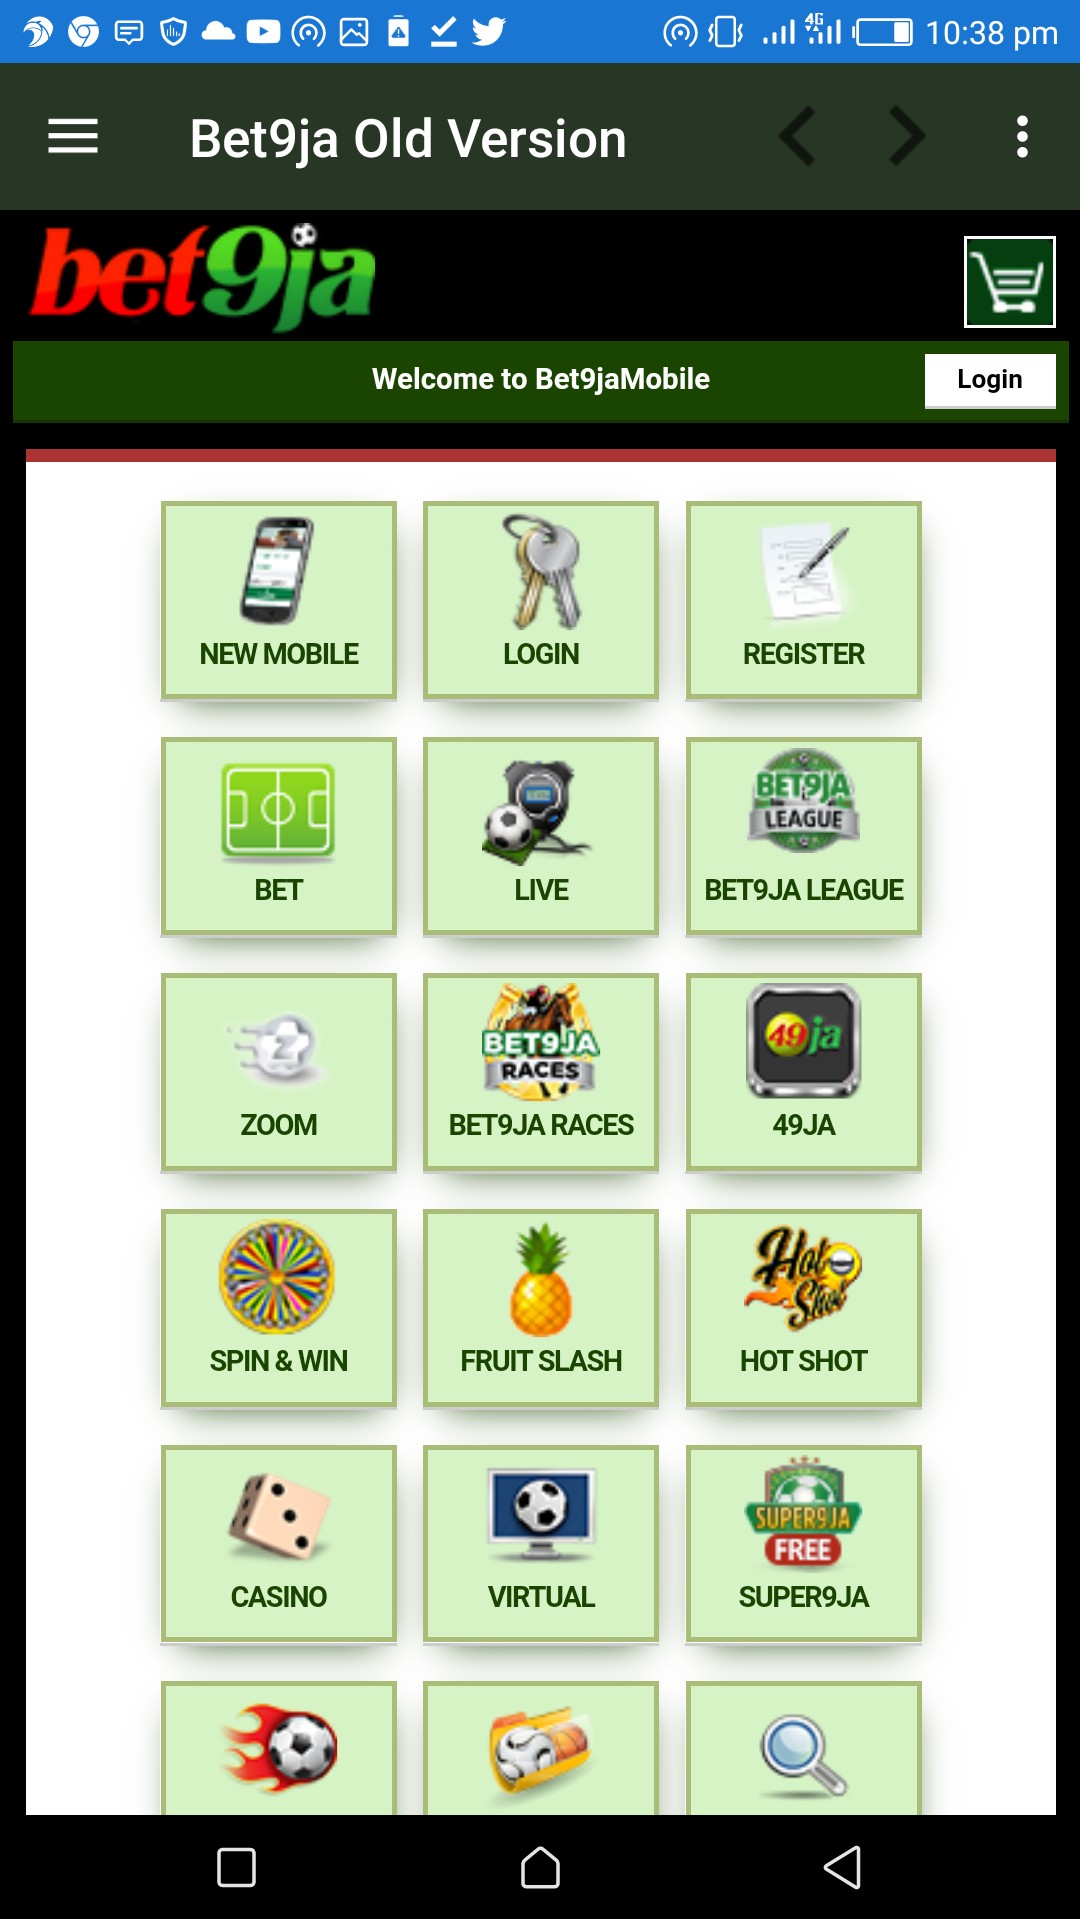 Screenshot 20200111 223818 - Bet9ja Mobile App Old Version (Original)